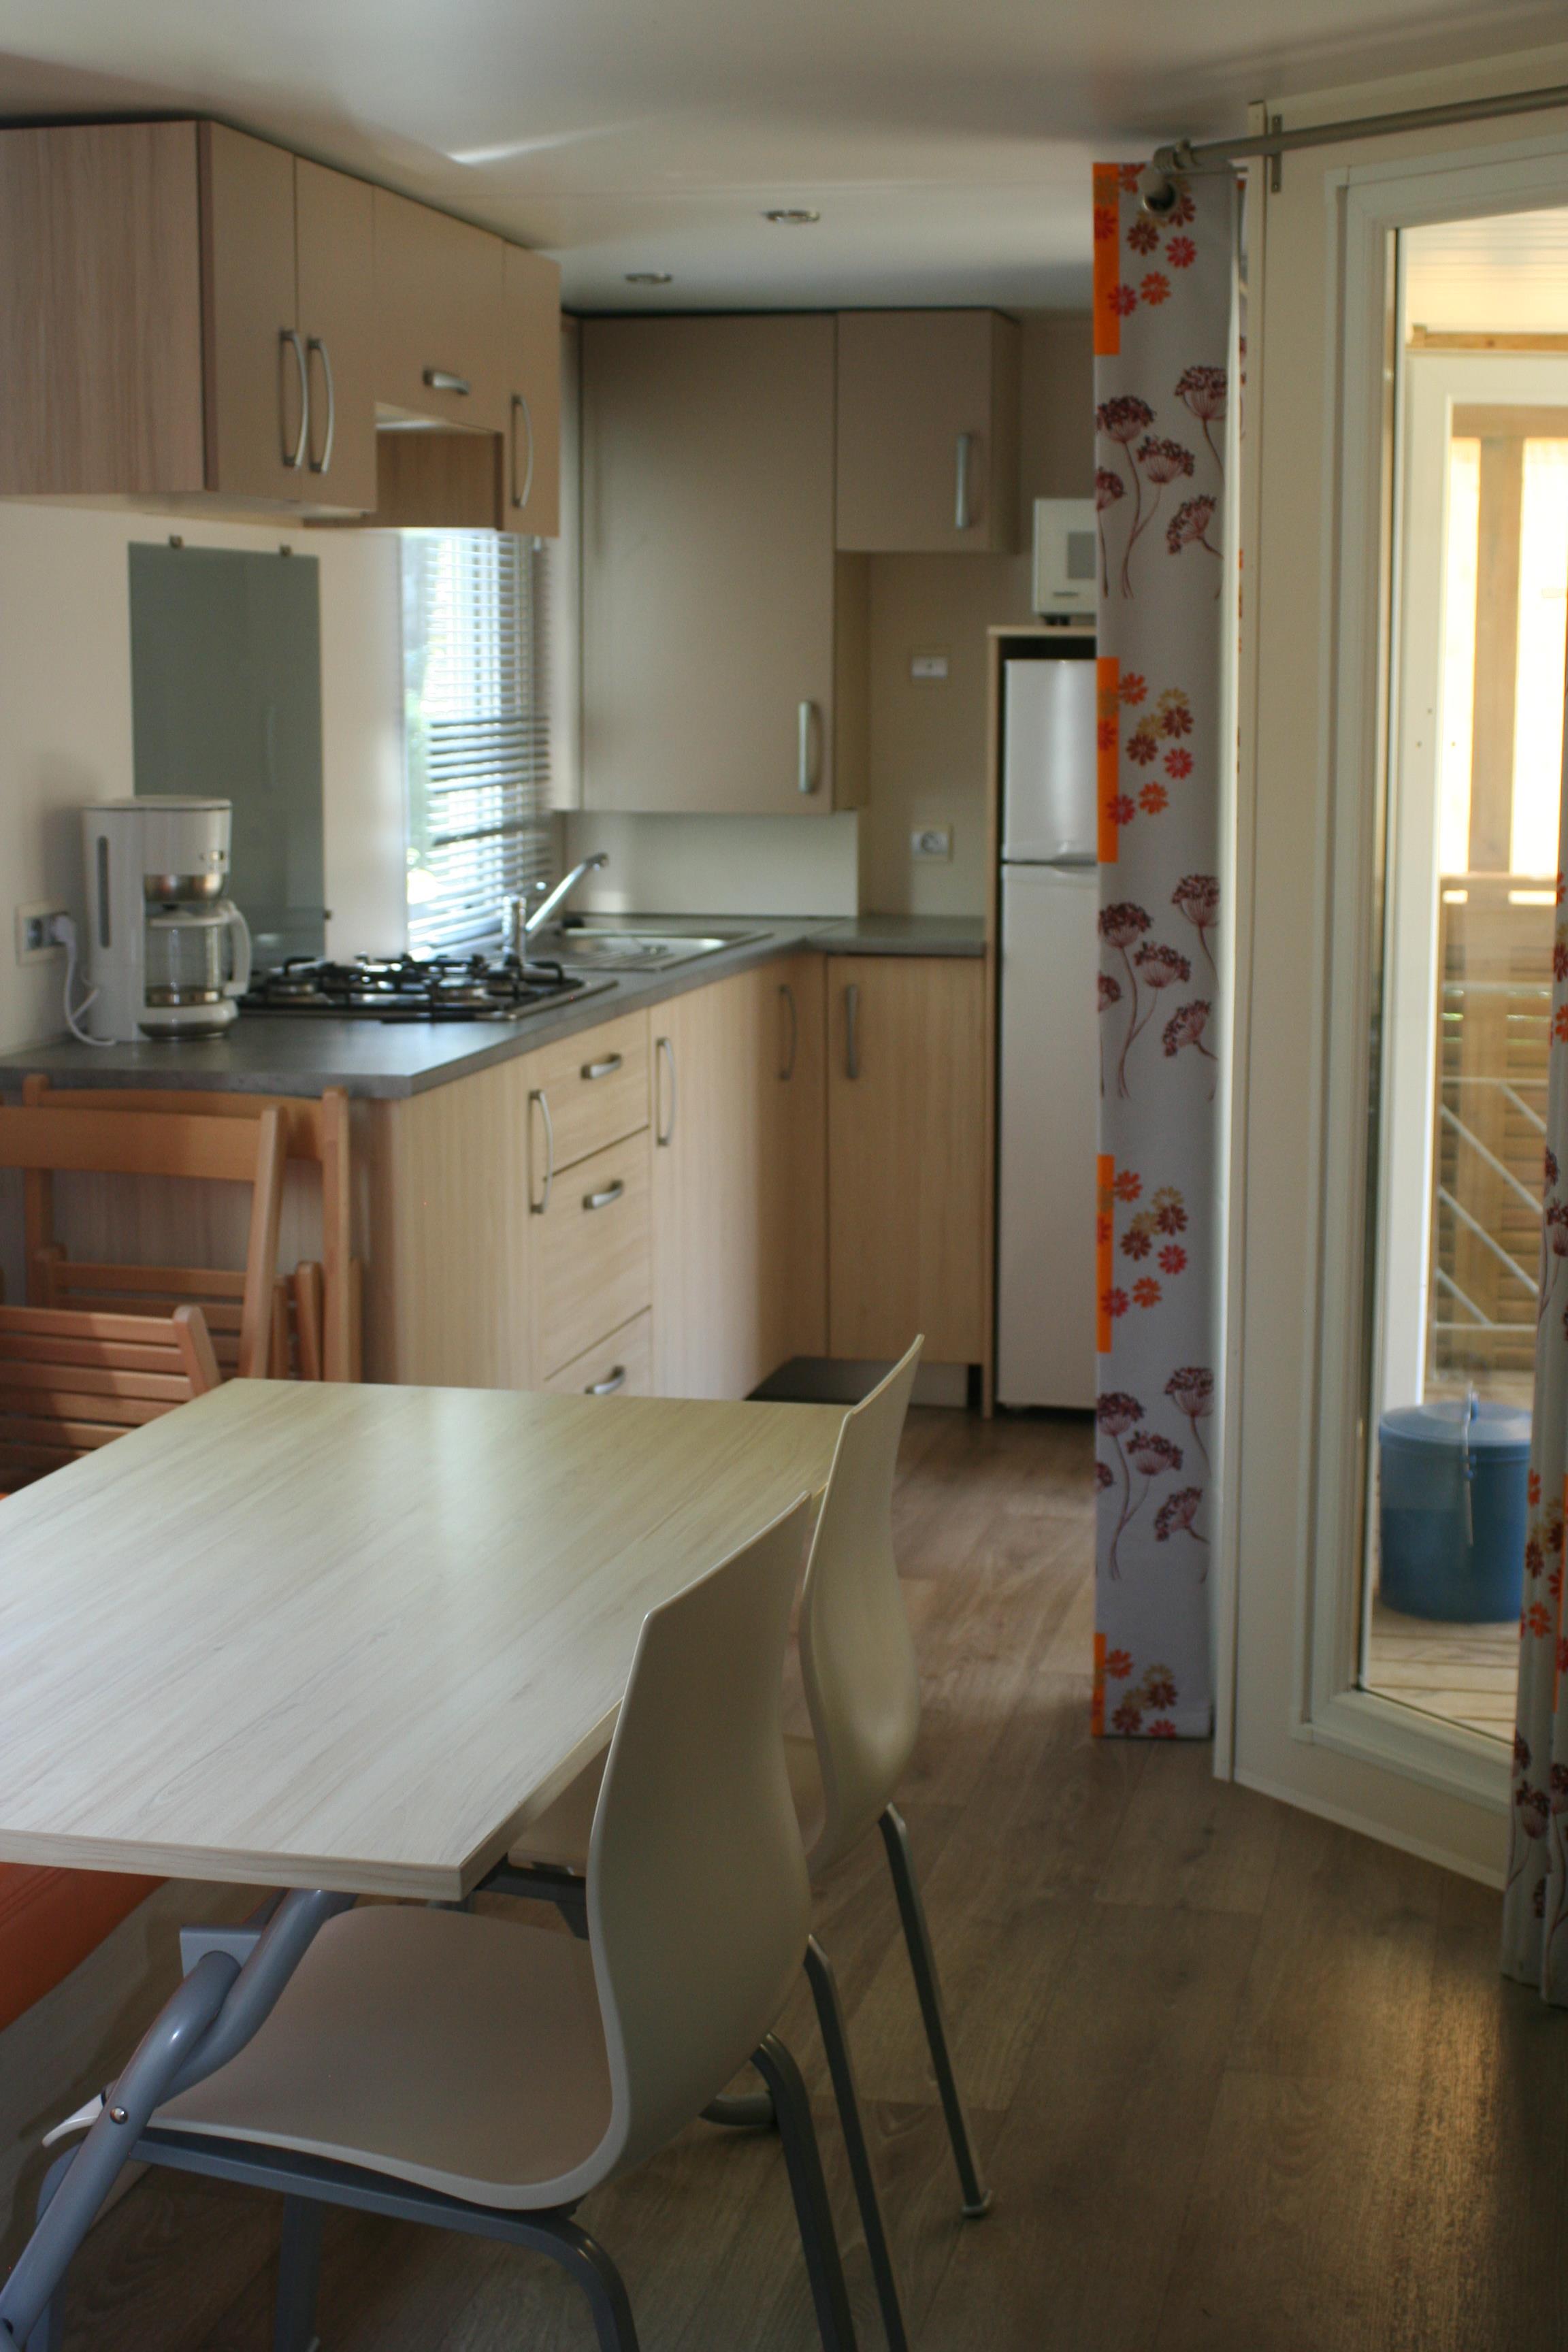 Accommodation - Mobil-Home Soléo (32 M2) - 3 Chambres - Année 2014 - Camping de Saumont